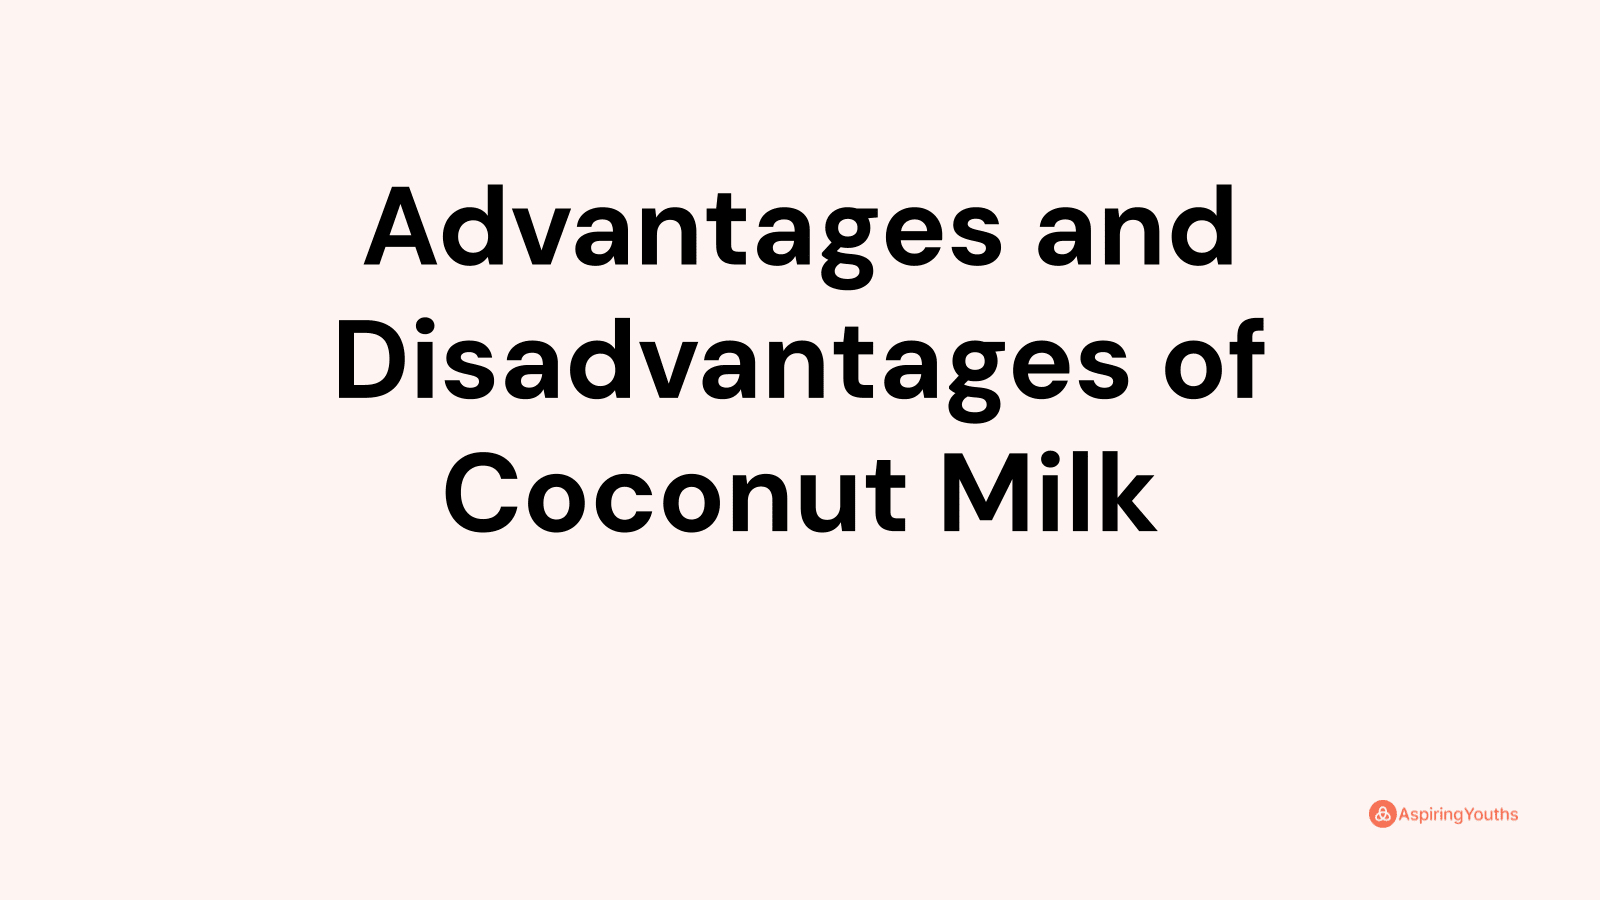 Advantages and disadvantages of Coconut Milk